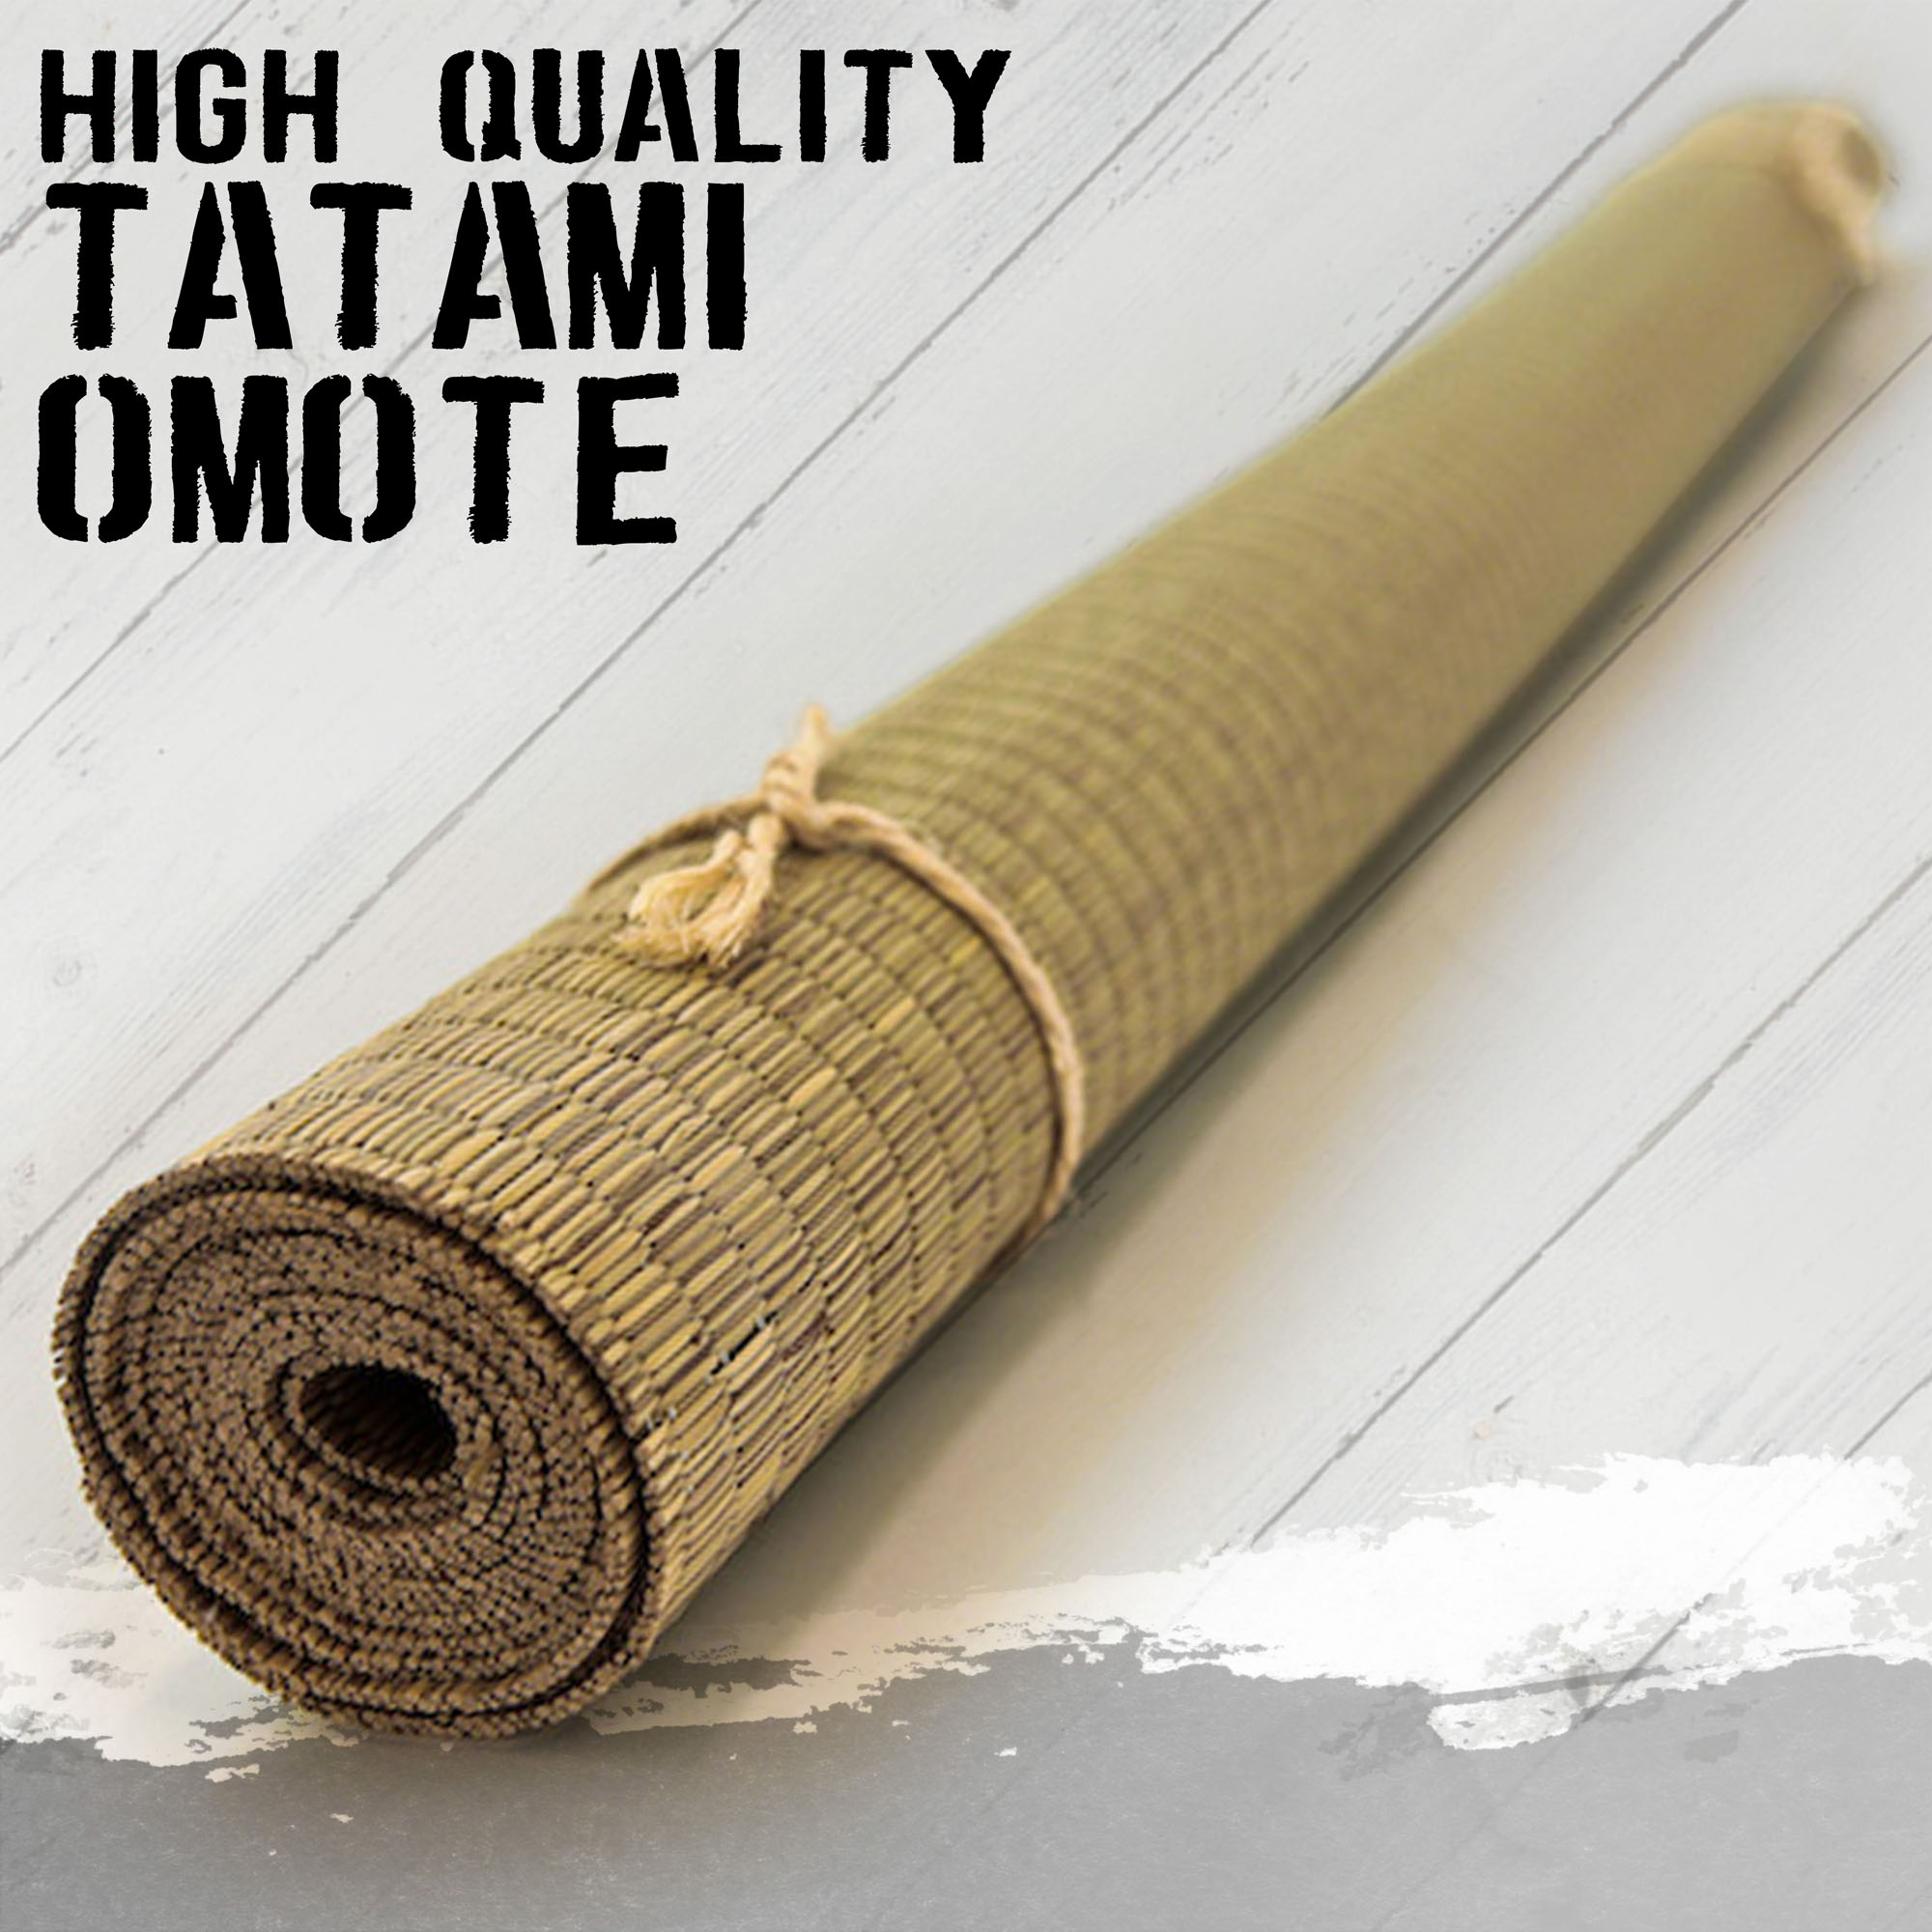 Tatami Omote - high quality